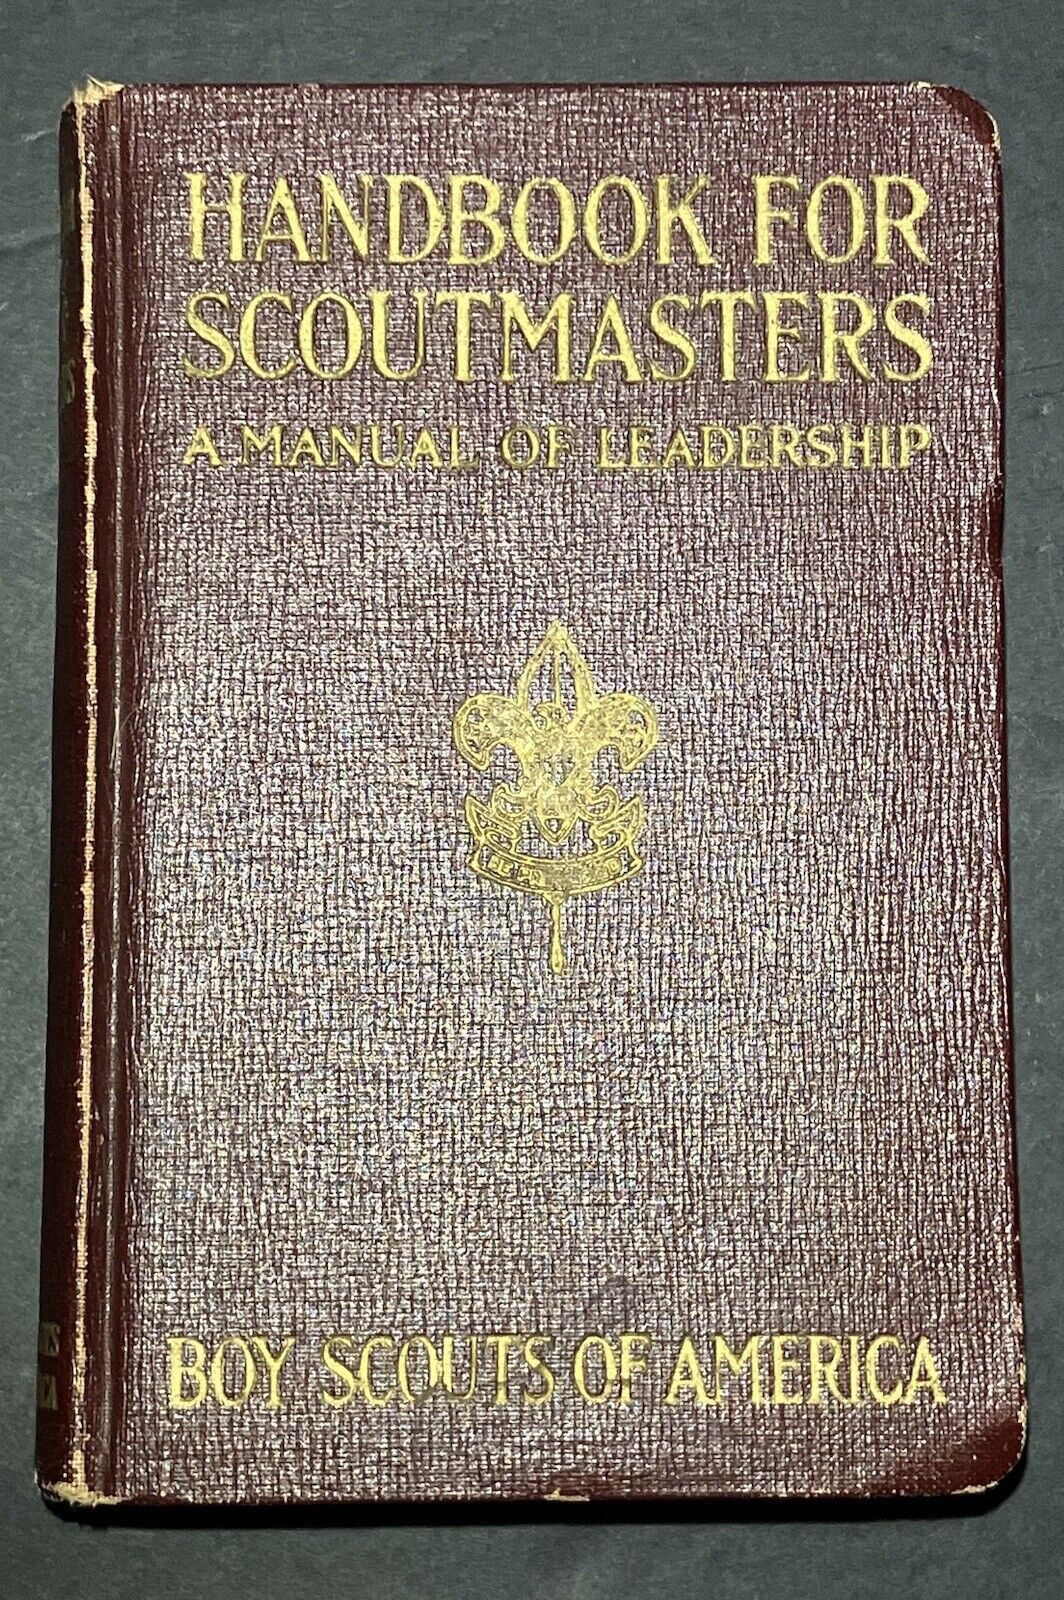 BSA HANDBOOK FOR SCOUTMASTERS LEADERSHIP MANUAL 2ND HANDBOOK 18TH IMPRINT 1932